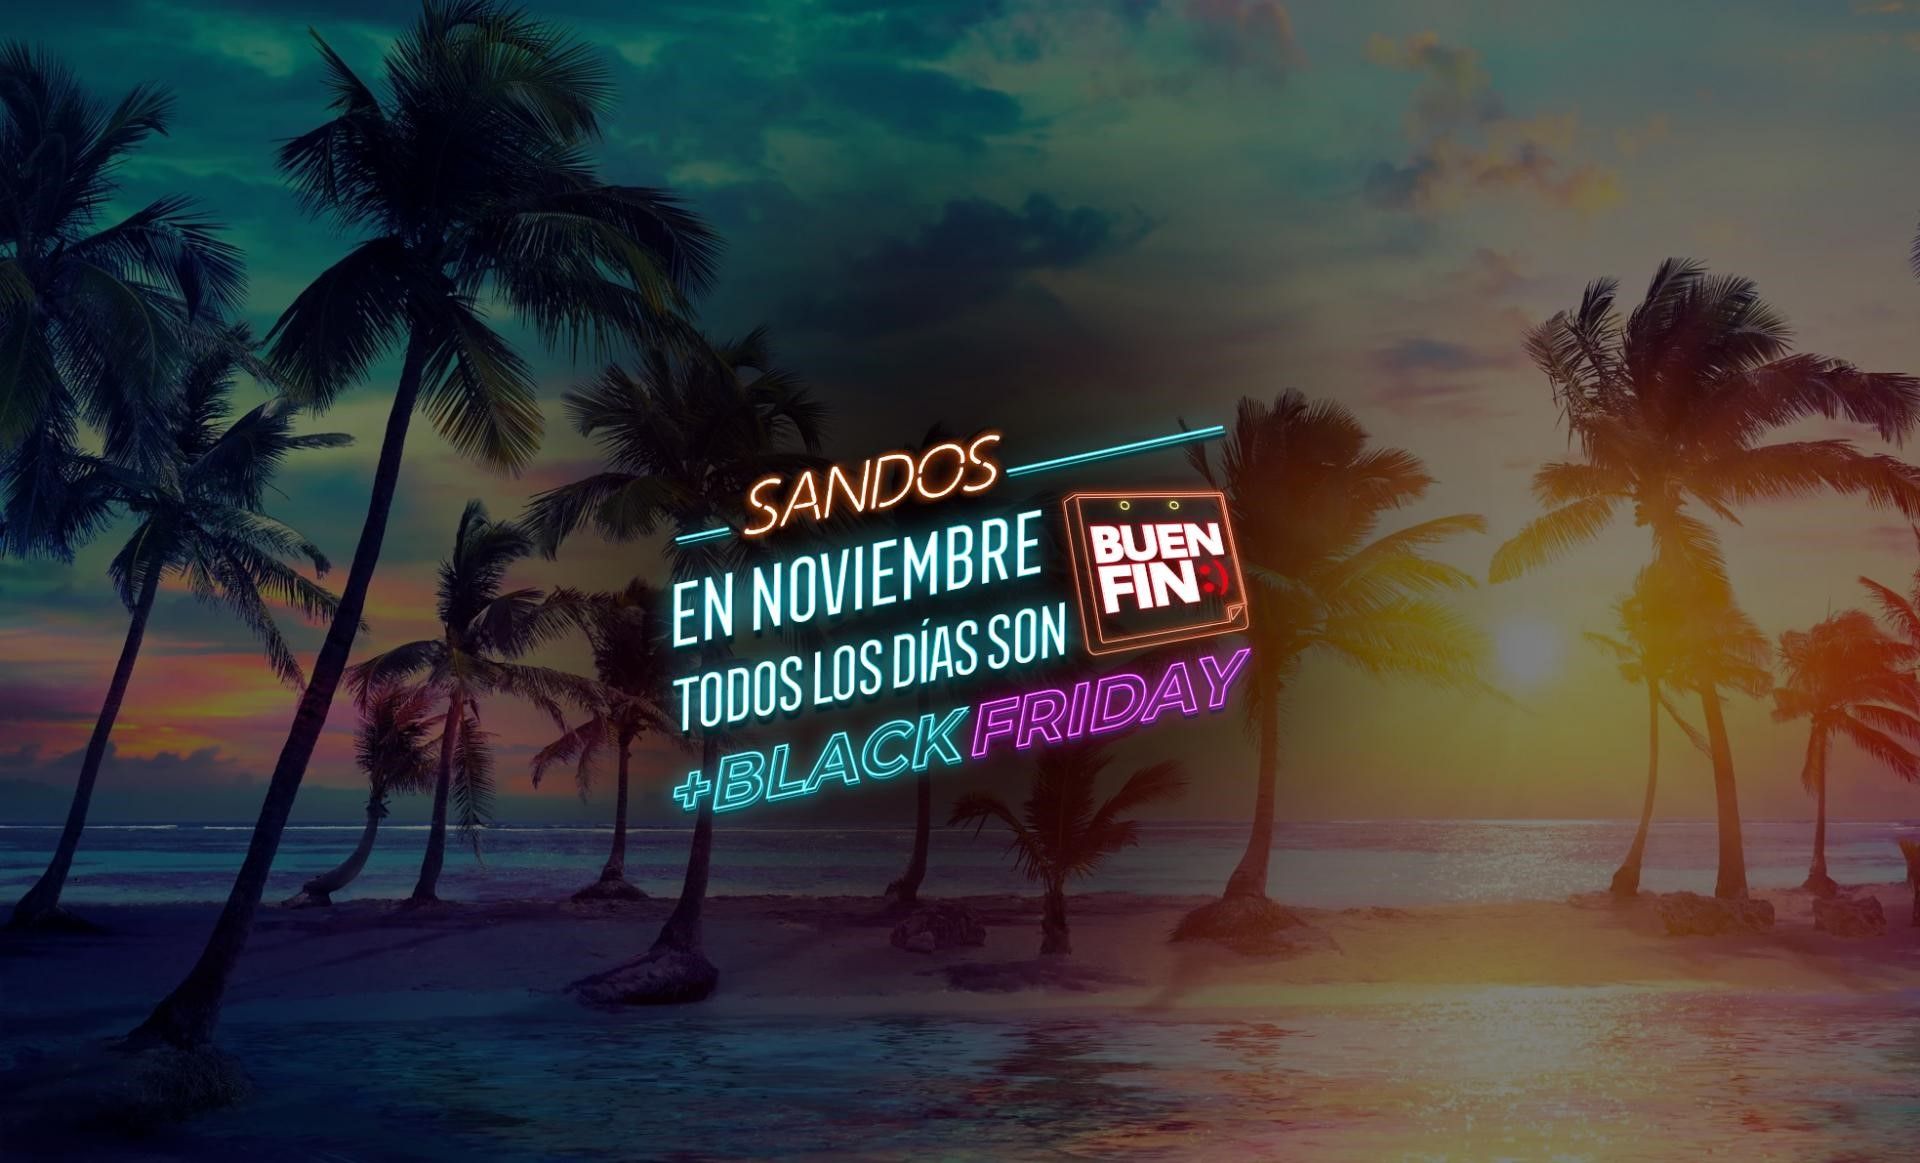 Sandos - Oferta de Buen Fin + Black Friday todo noviembre